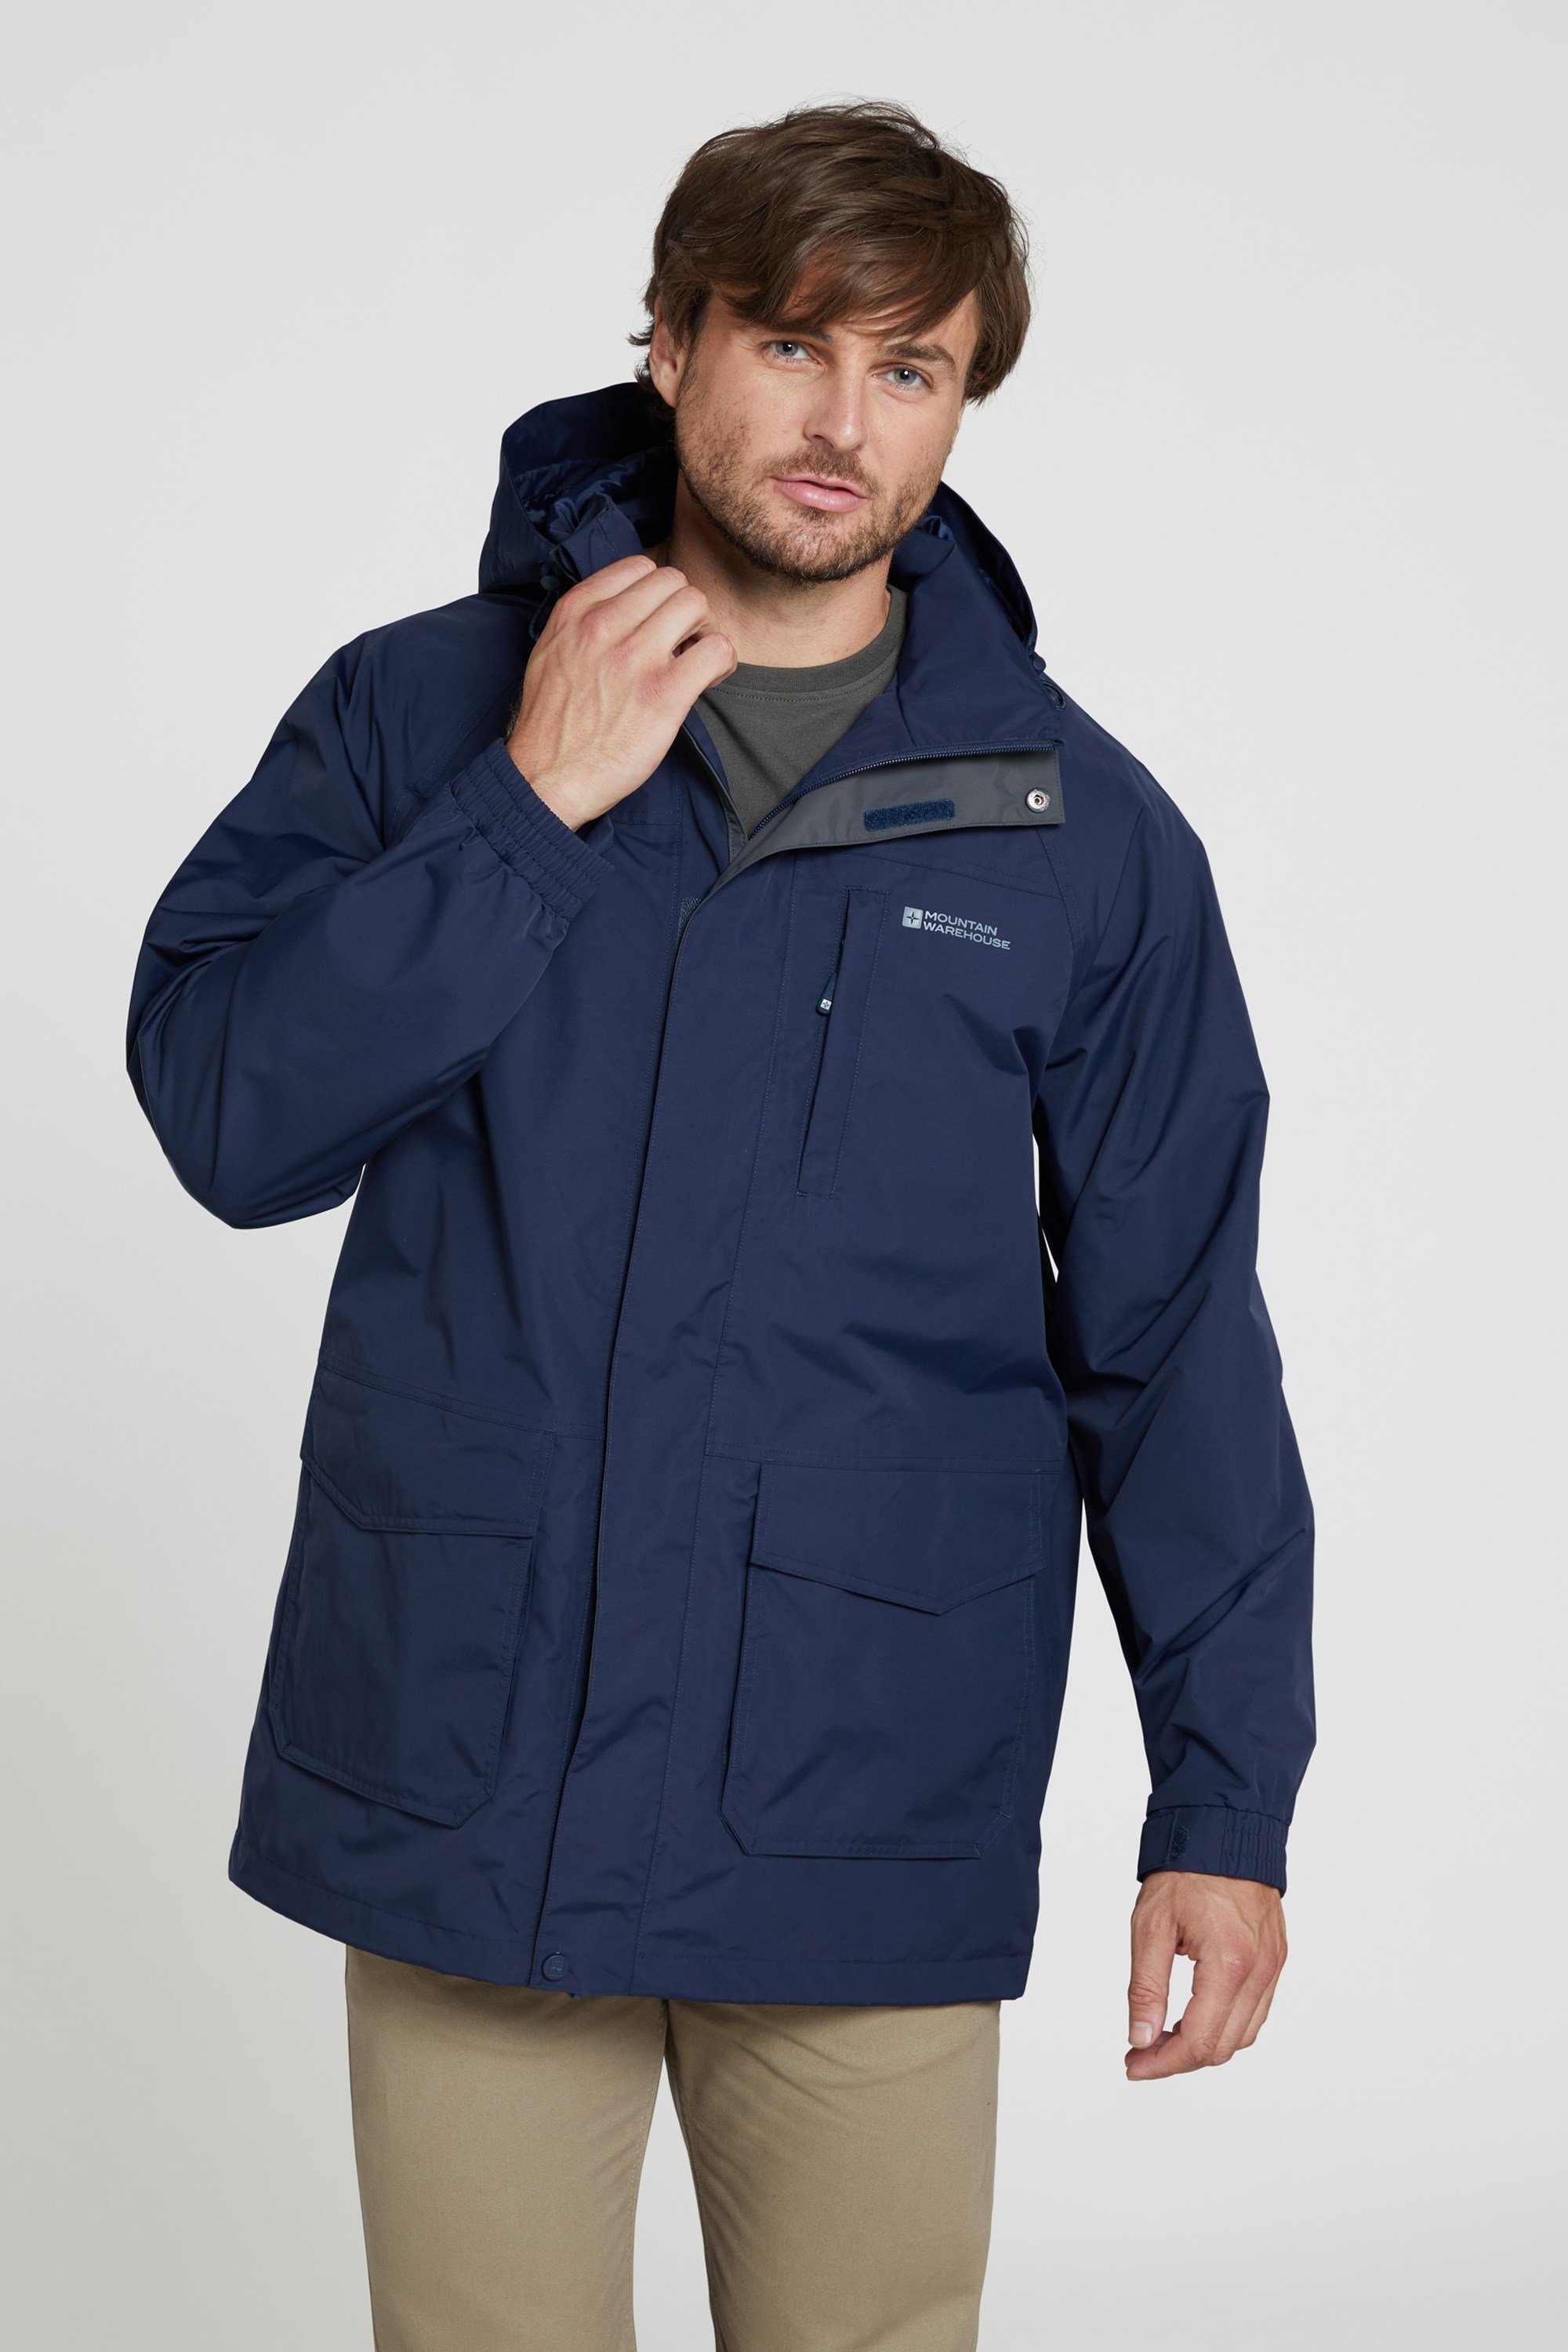 Mountain Warehouse Brisk Extreme Boys Waterproof Jacket Taped Seams 